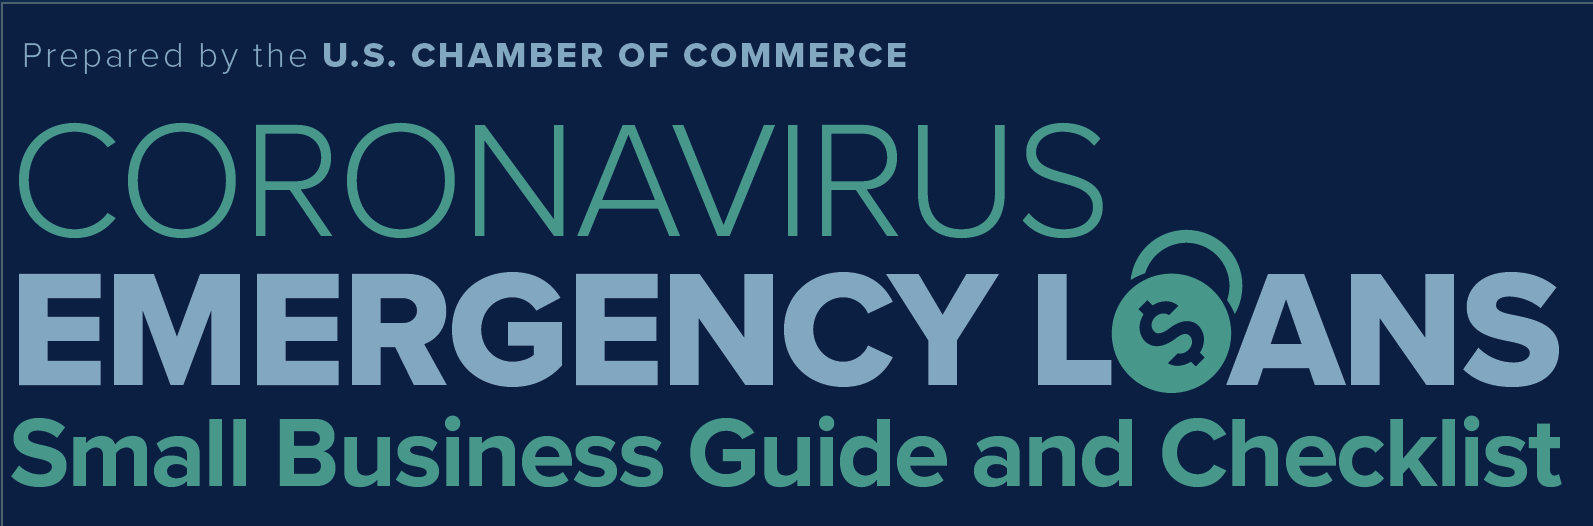 US Chamber Coronavirus Emergency Loans Small Business Checklist Main Photo